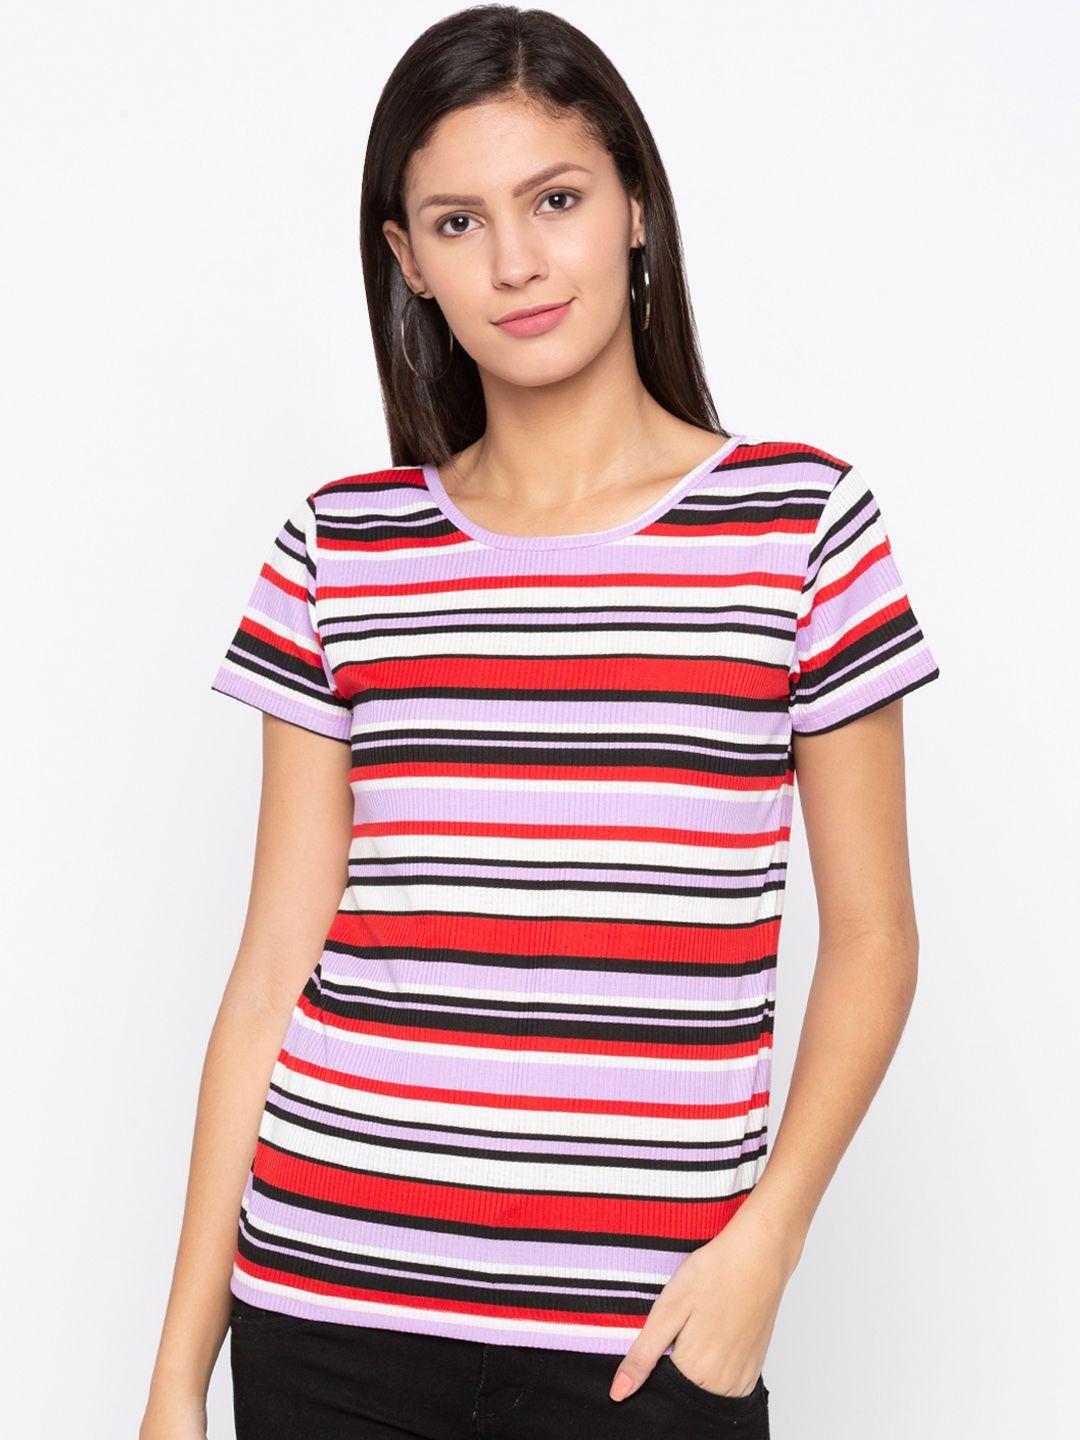 globus women multicoloured striped top